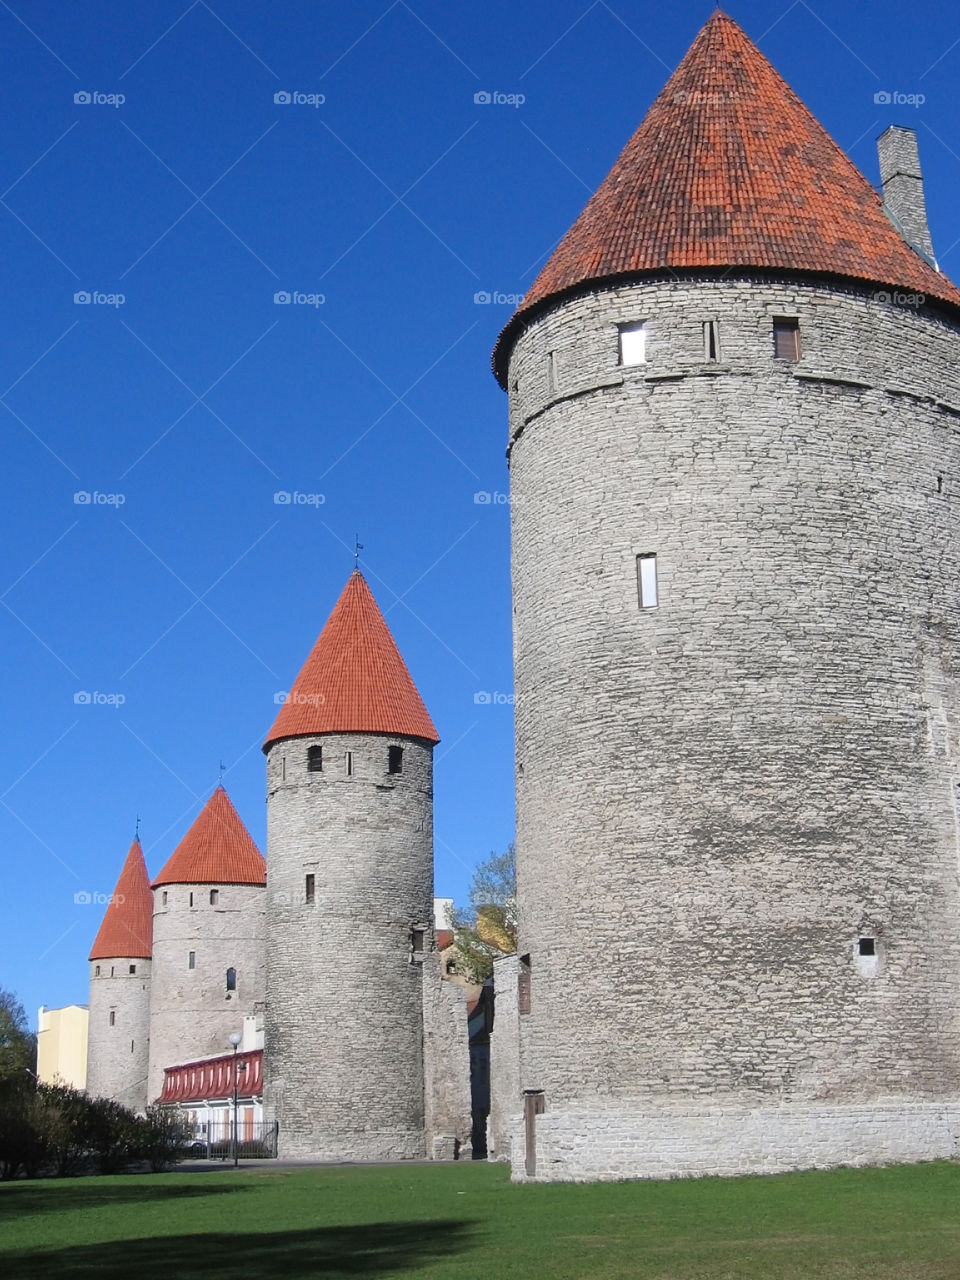 Tallinn in Estonia. 